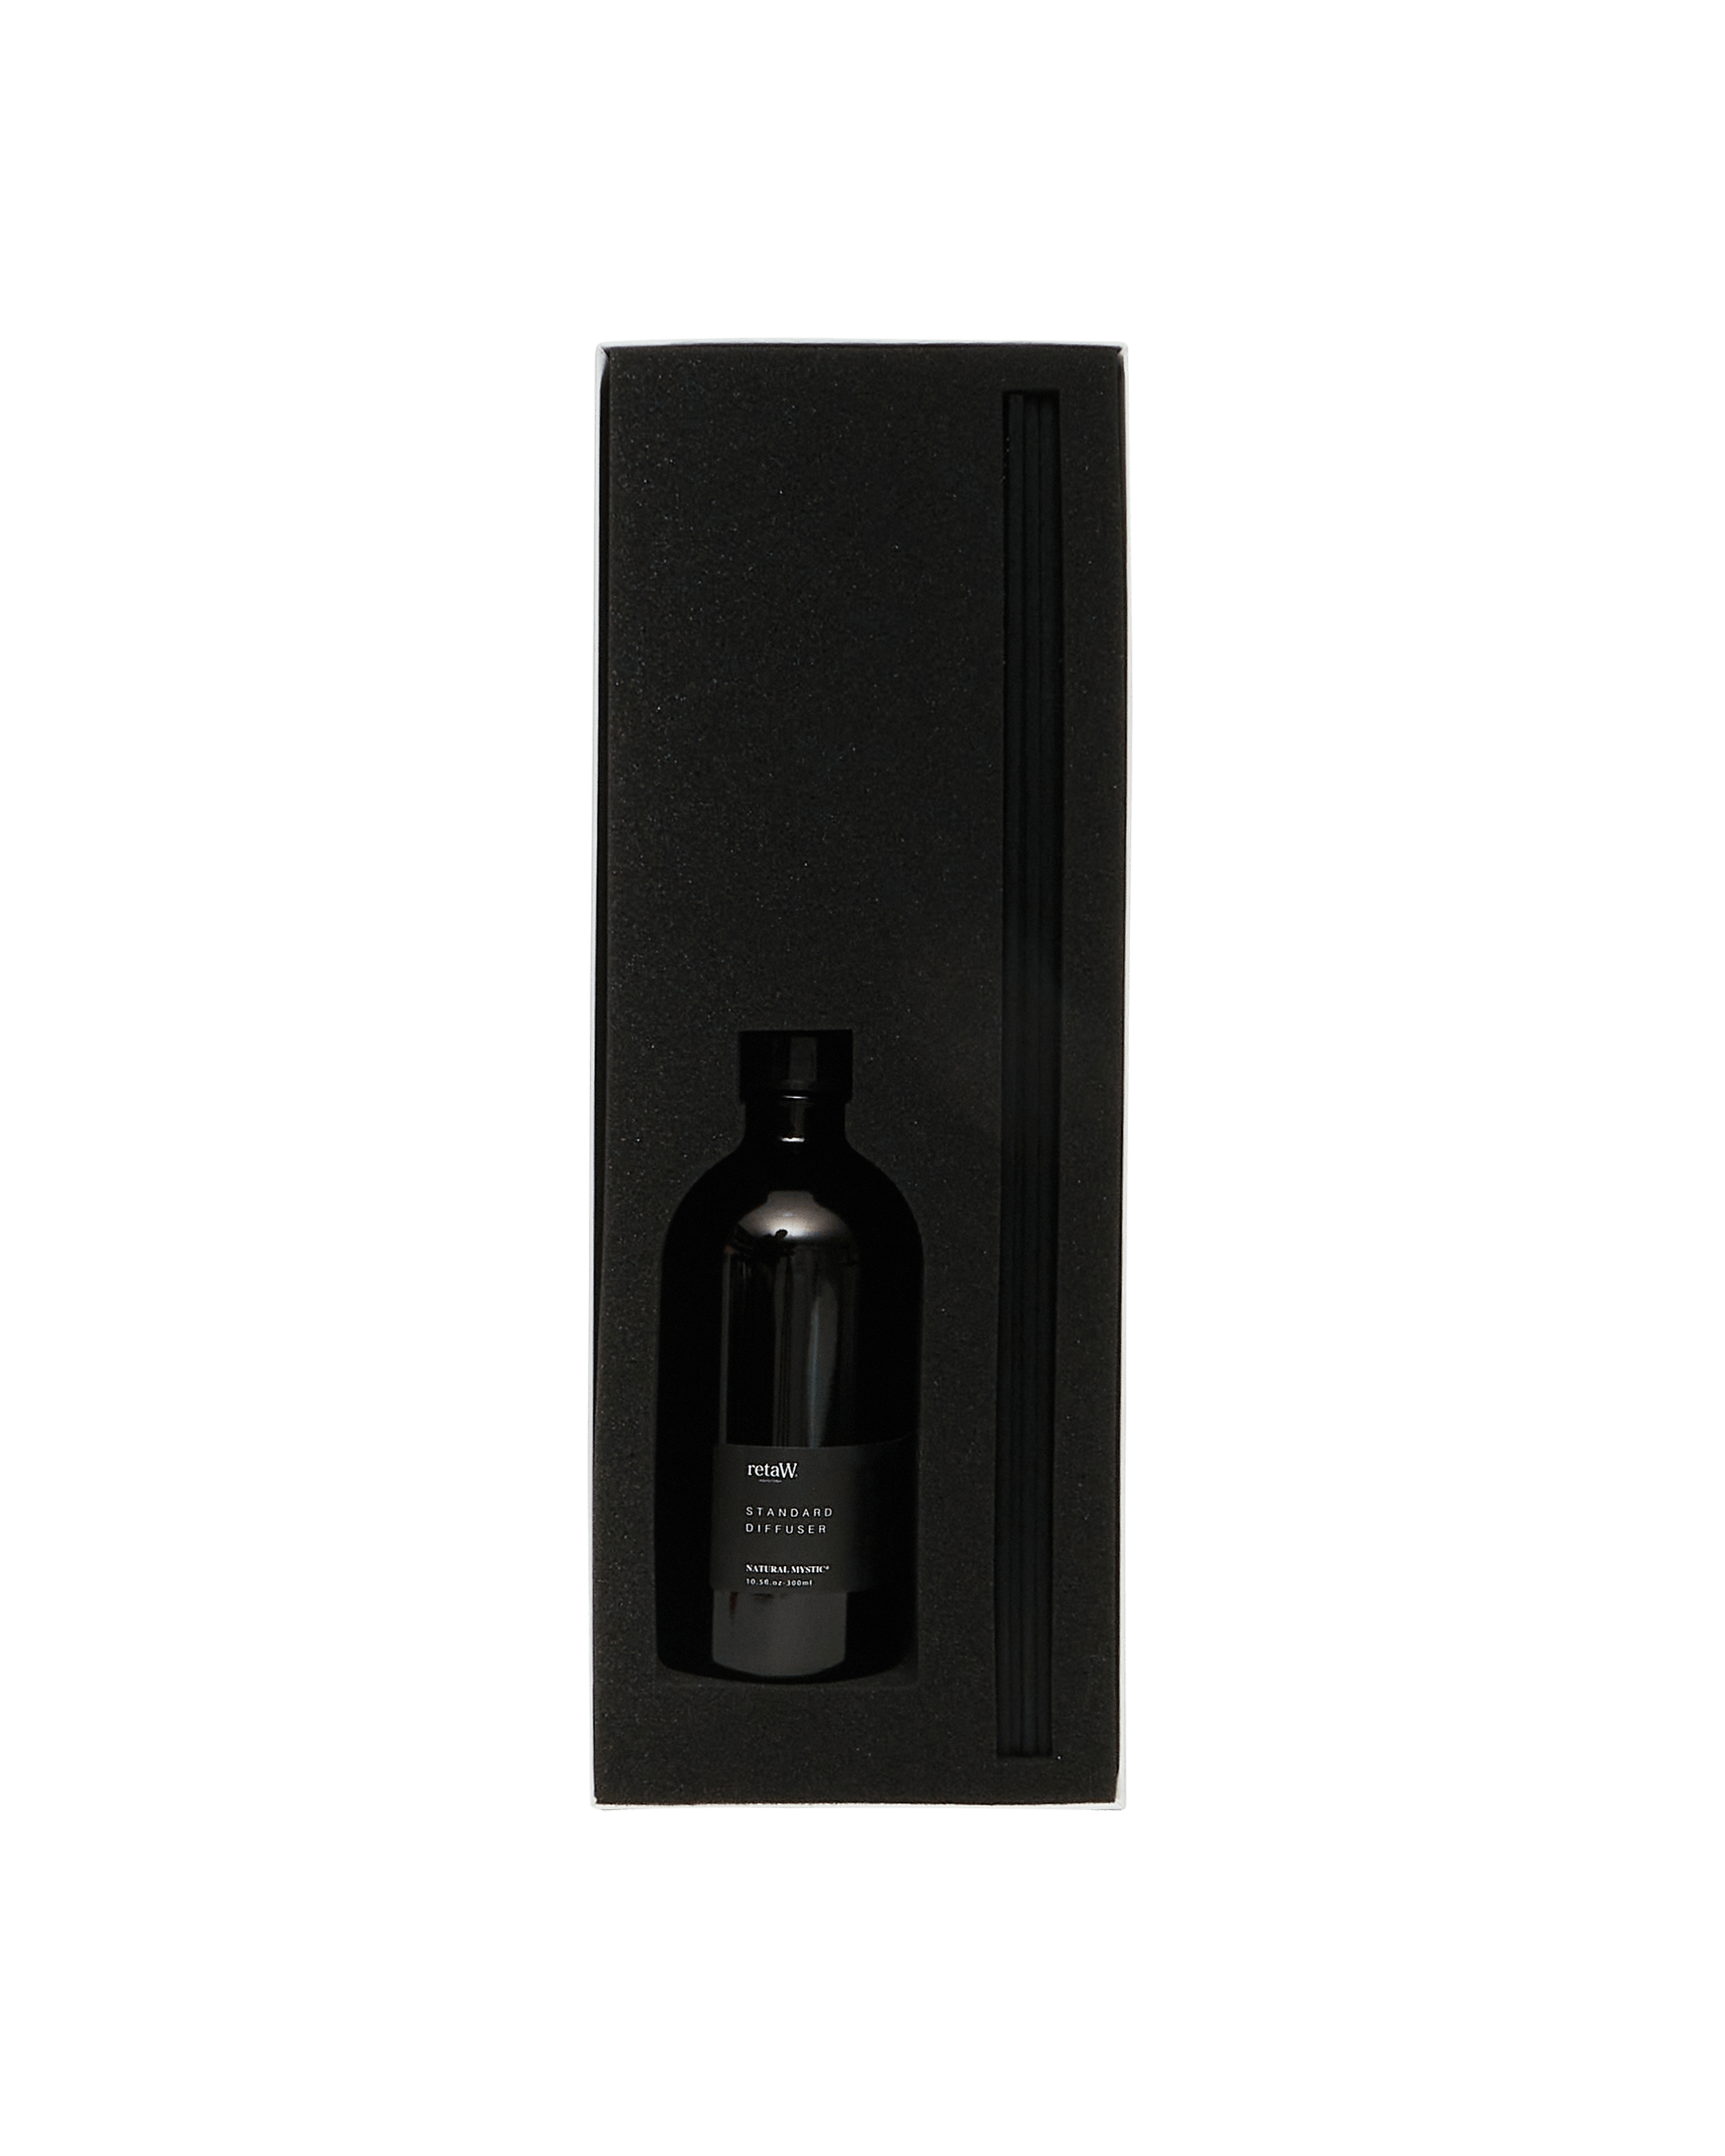 Reta-W Standard Reed Diffuser Natural Mystic Multicolor Grooming Fragrances RTW-296 MULTI